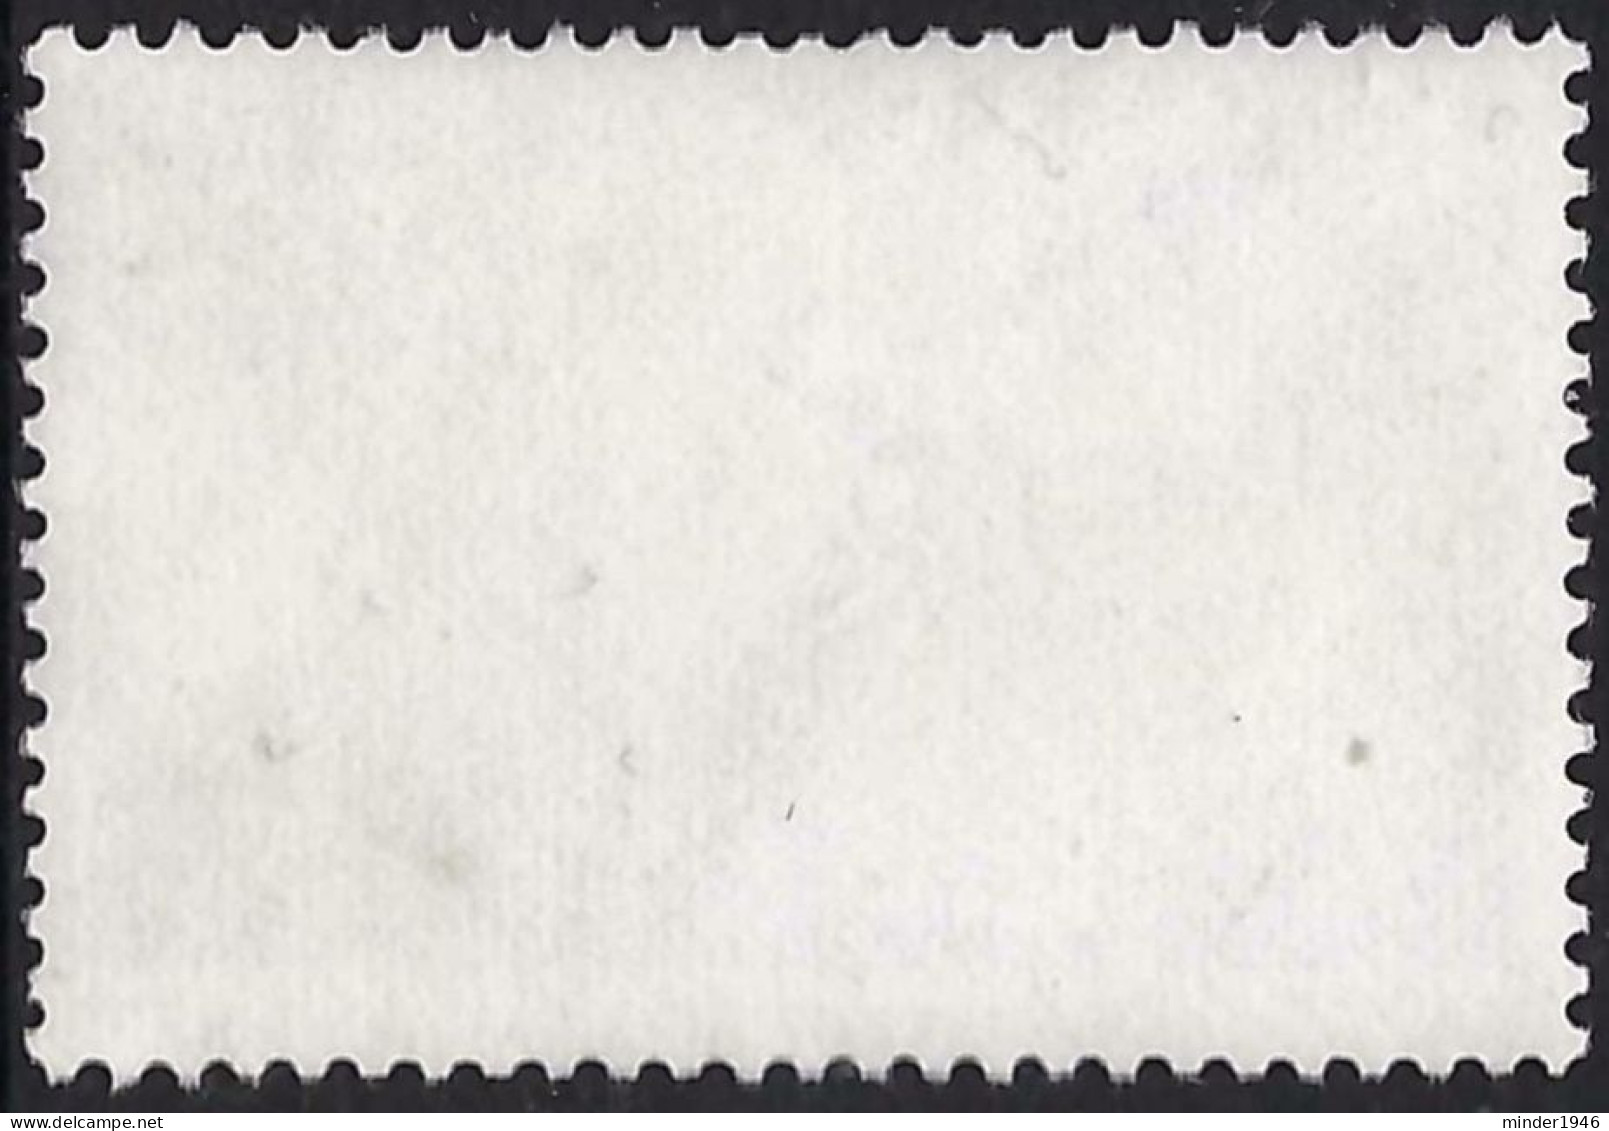 AUSTRALIAN ANTARCTIC TERRITORY (AAT) 1973 QEII 20c Multicoloured, Alibatross SG29 FU - Oblitérés